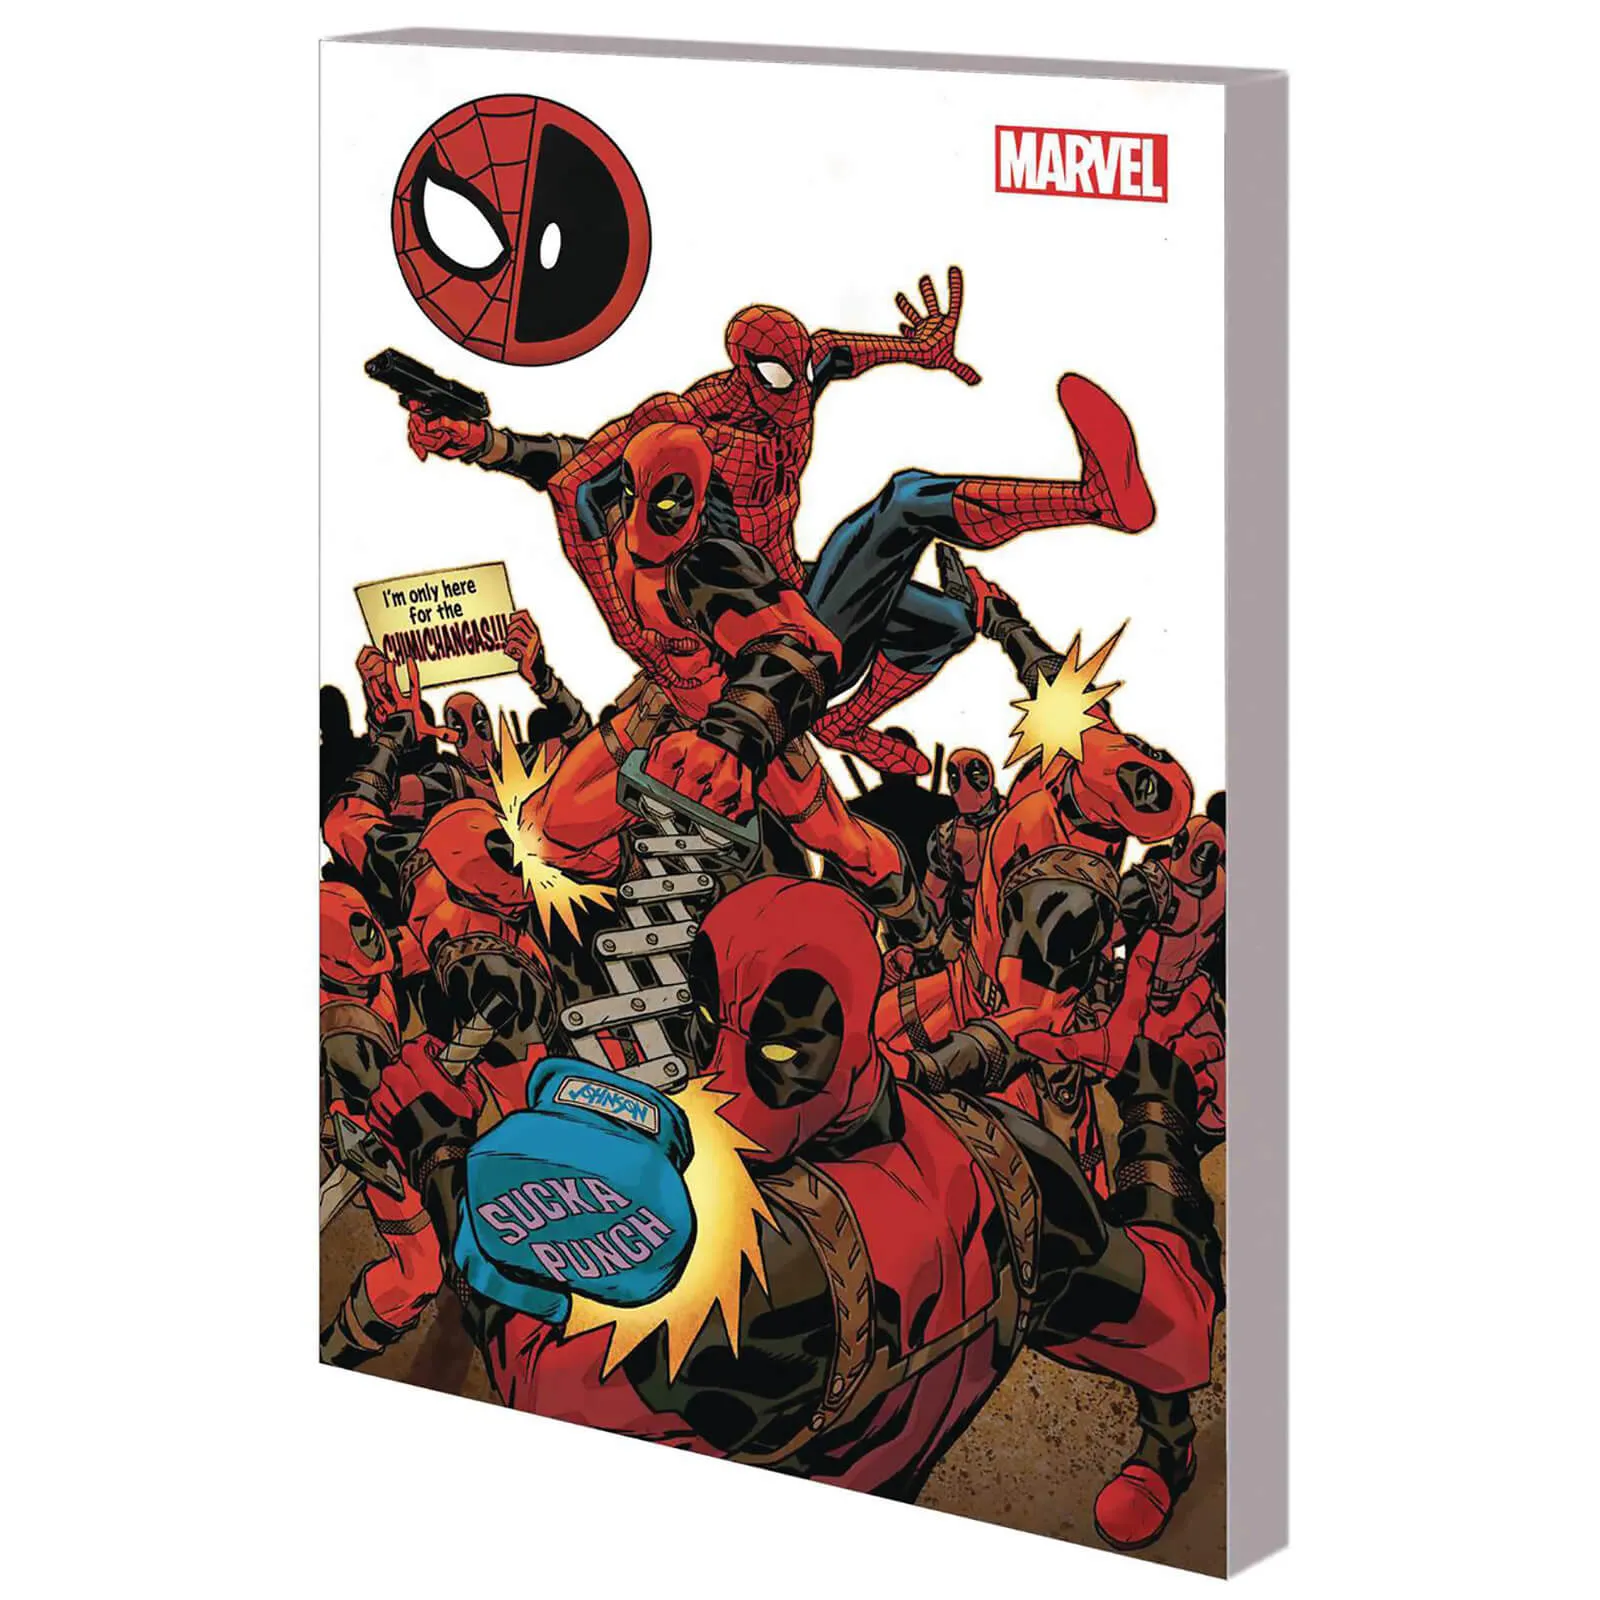  Spider-man Deadpool Trade Paperback Vol 06 Wlmd Graphic Novel